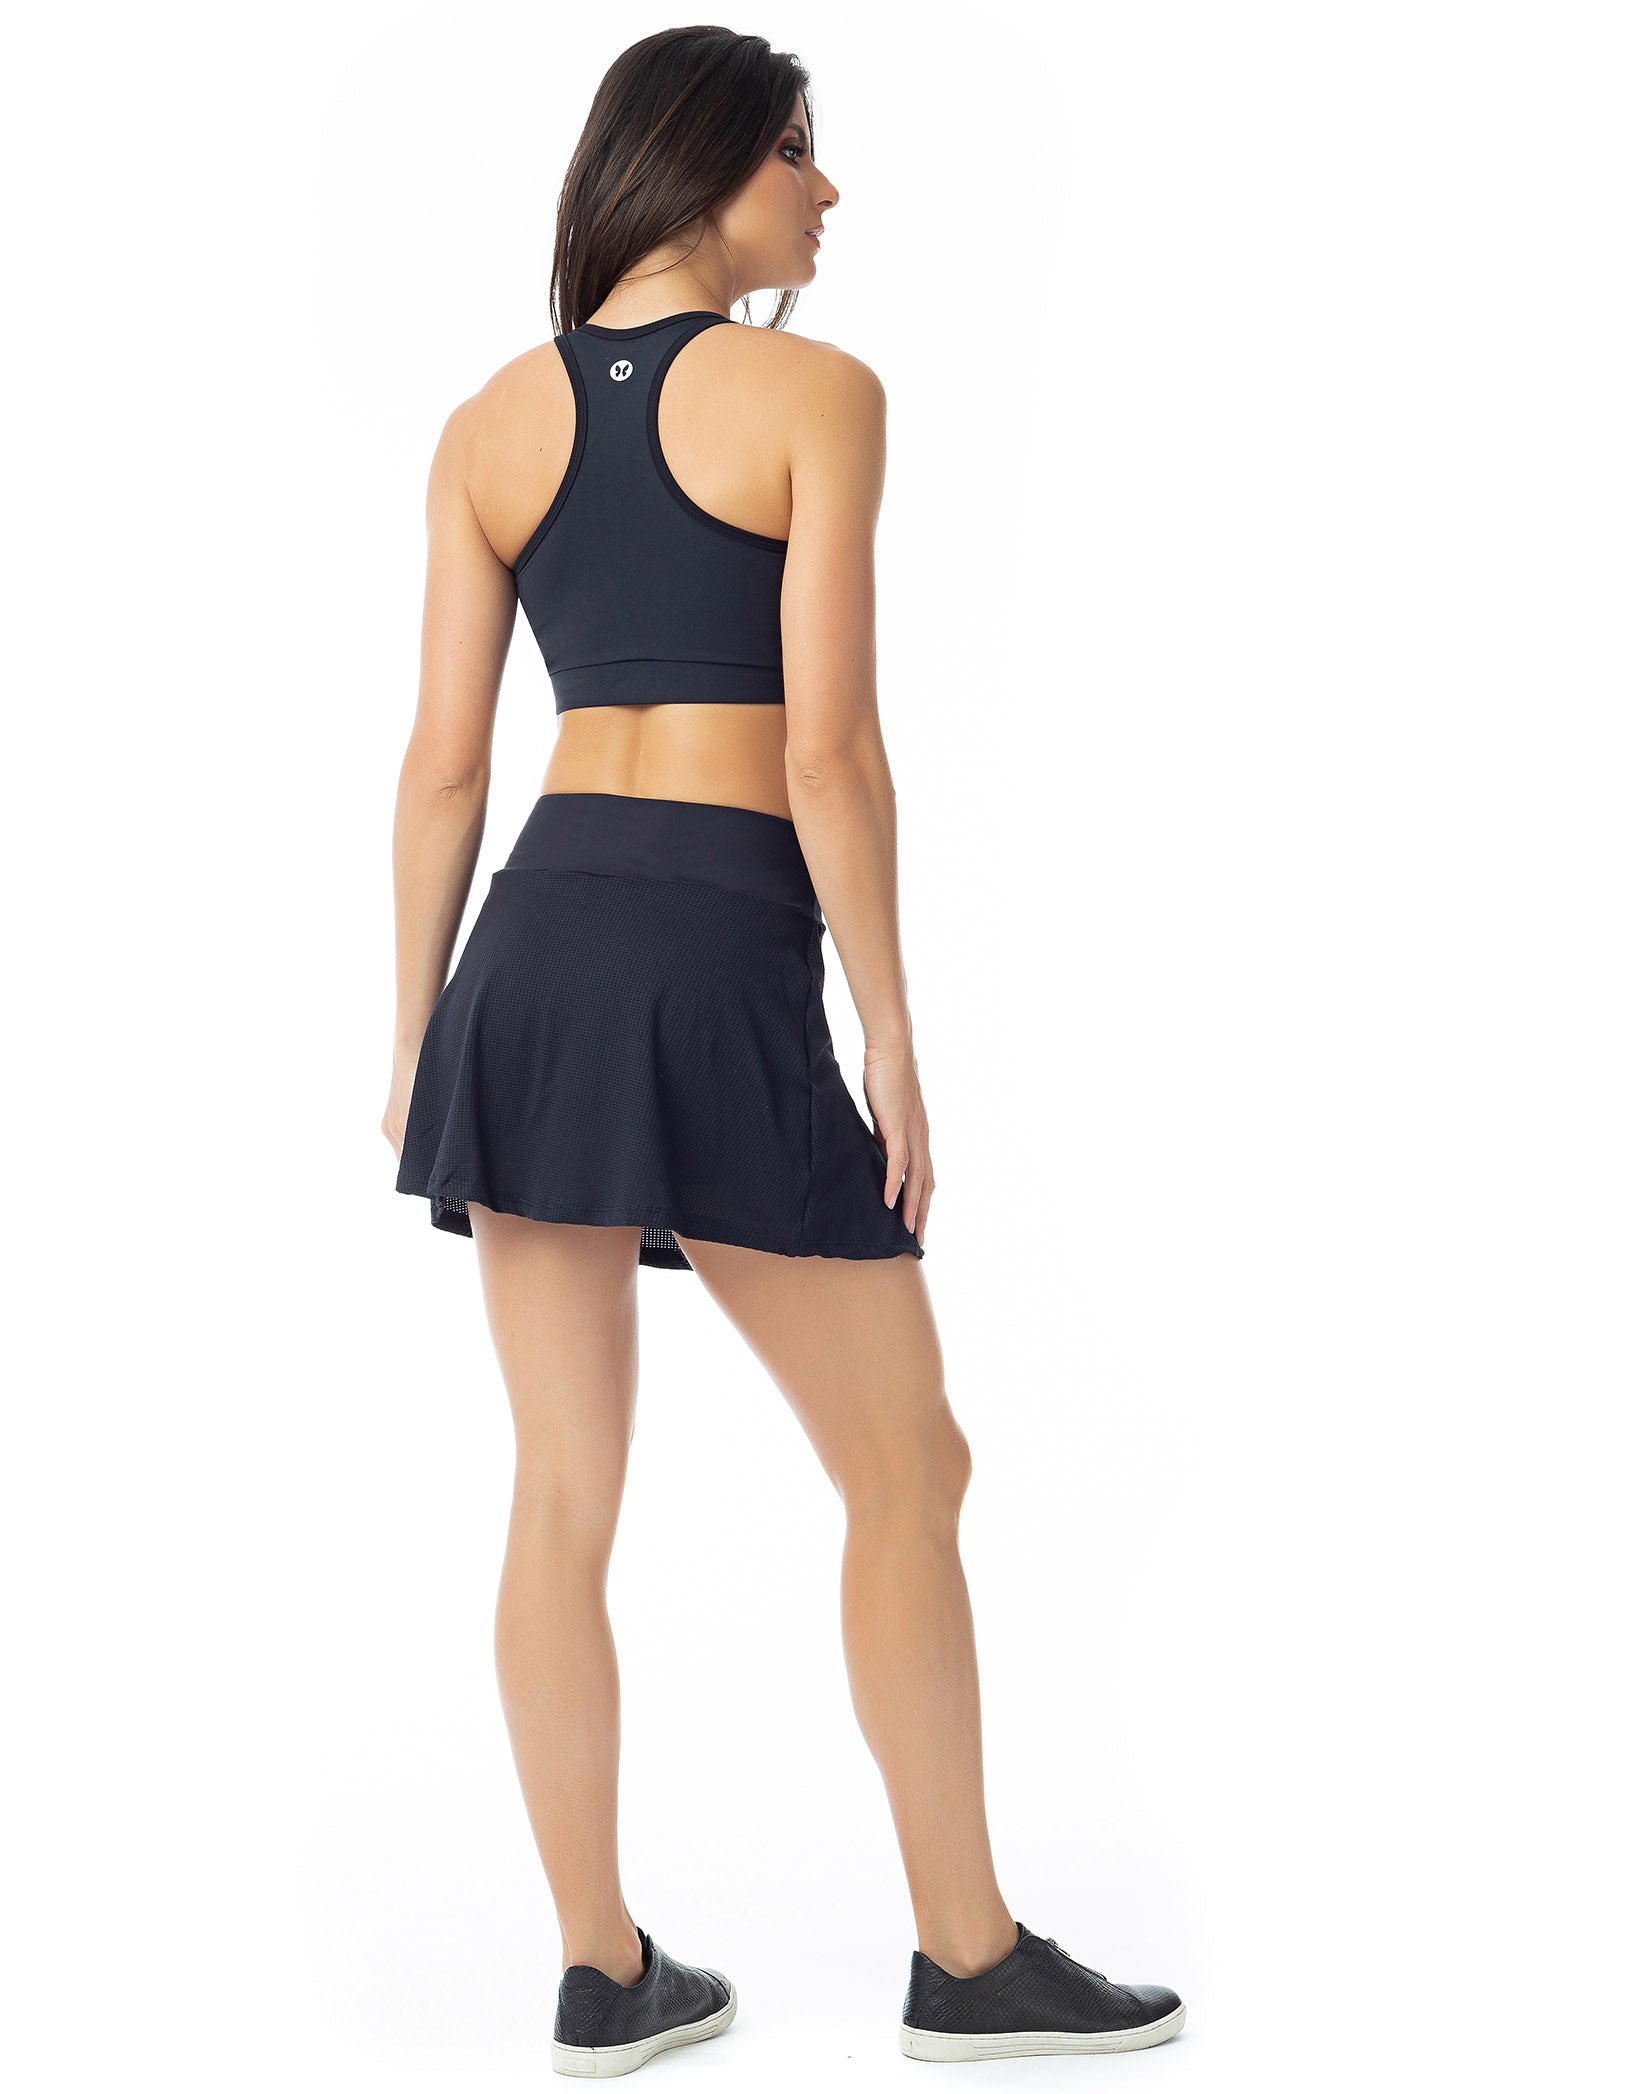 Vestem - Black Camy Skirt - SA126.ESS.C0002